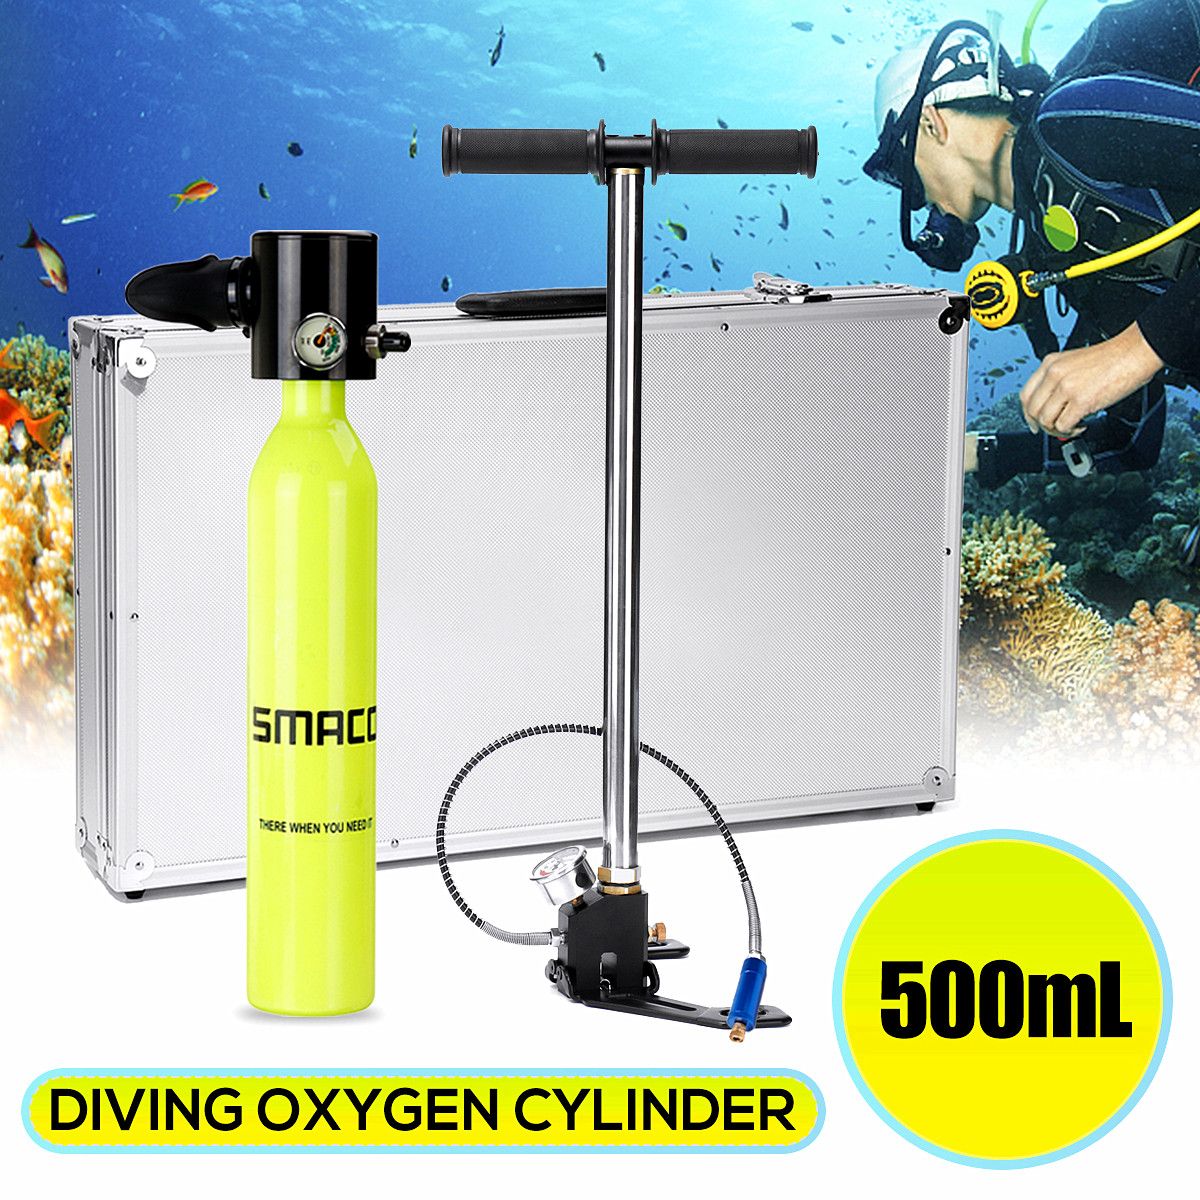 500mL-Portable-Mini-Oxygen-Cylinder-Air-Oxygen-Tank-Diving-Equipment-Set-Underwater-Diving-Accessori-1415394